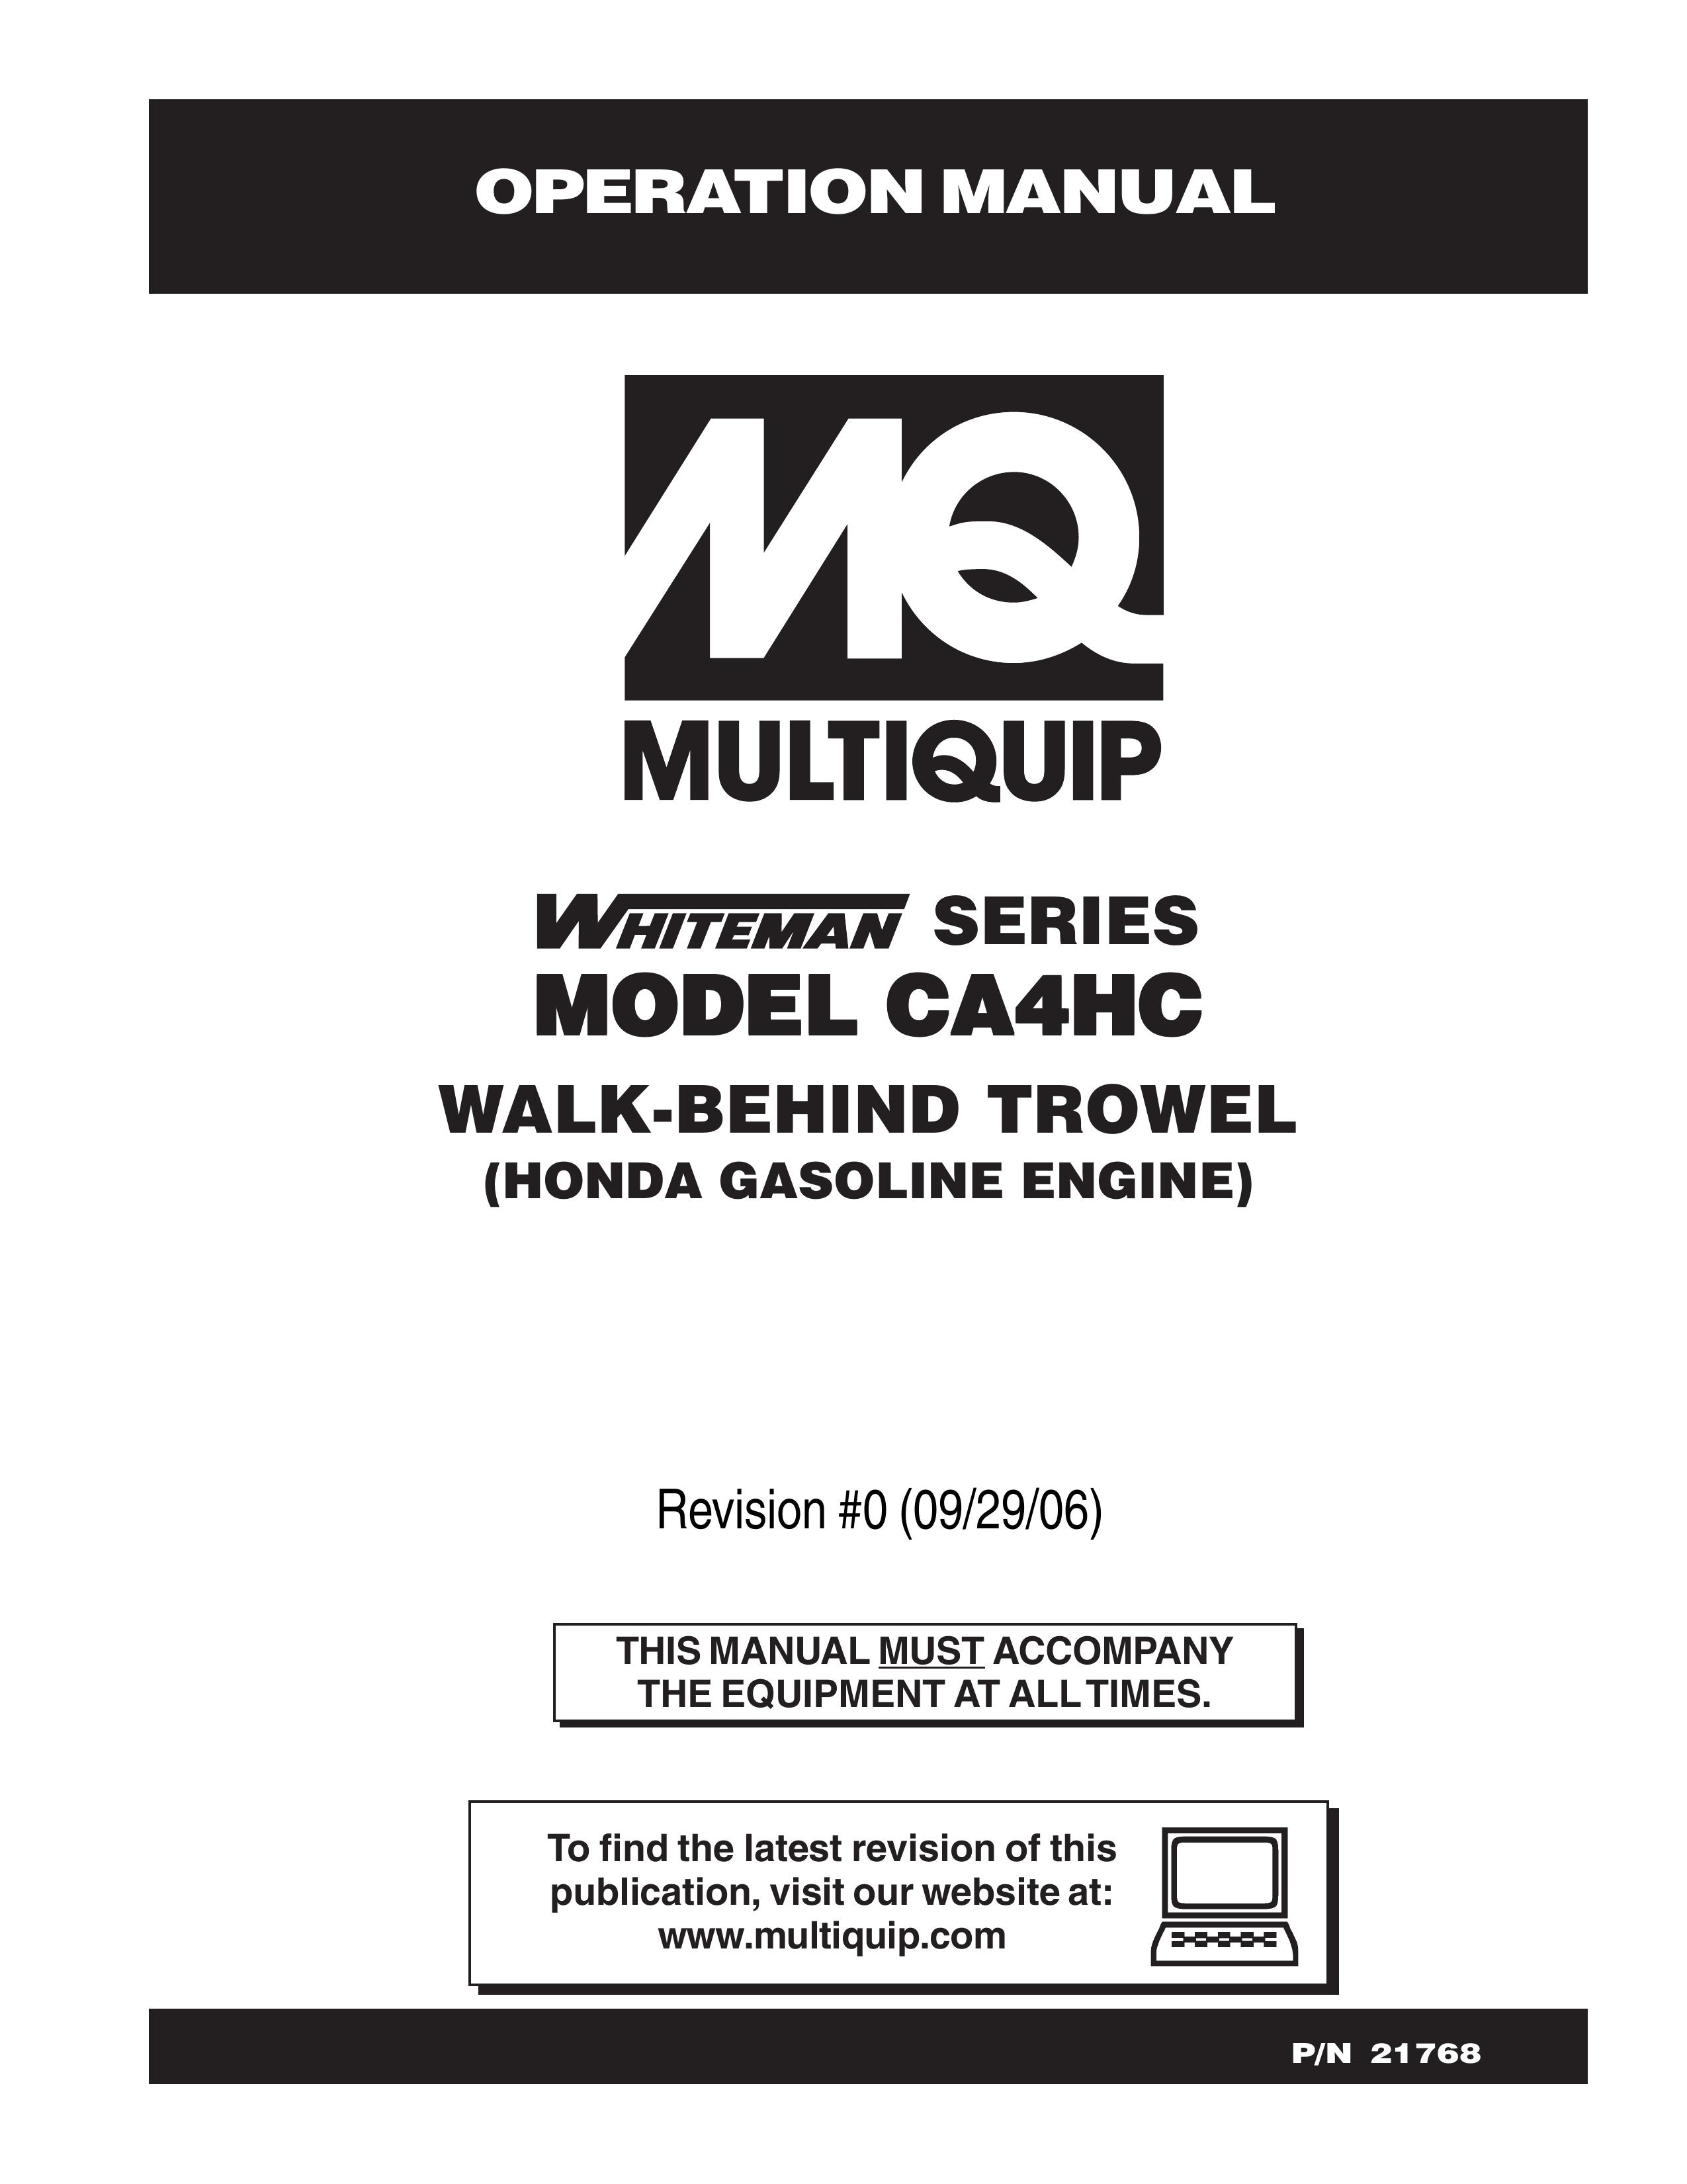 Multiquip CA4HC Lawn Mower User Manual